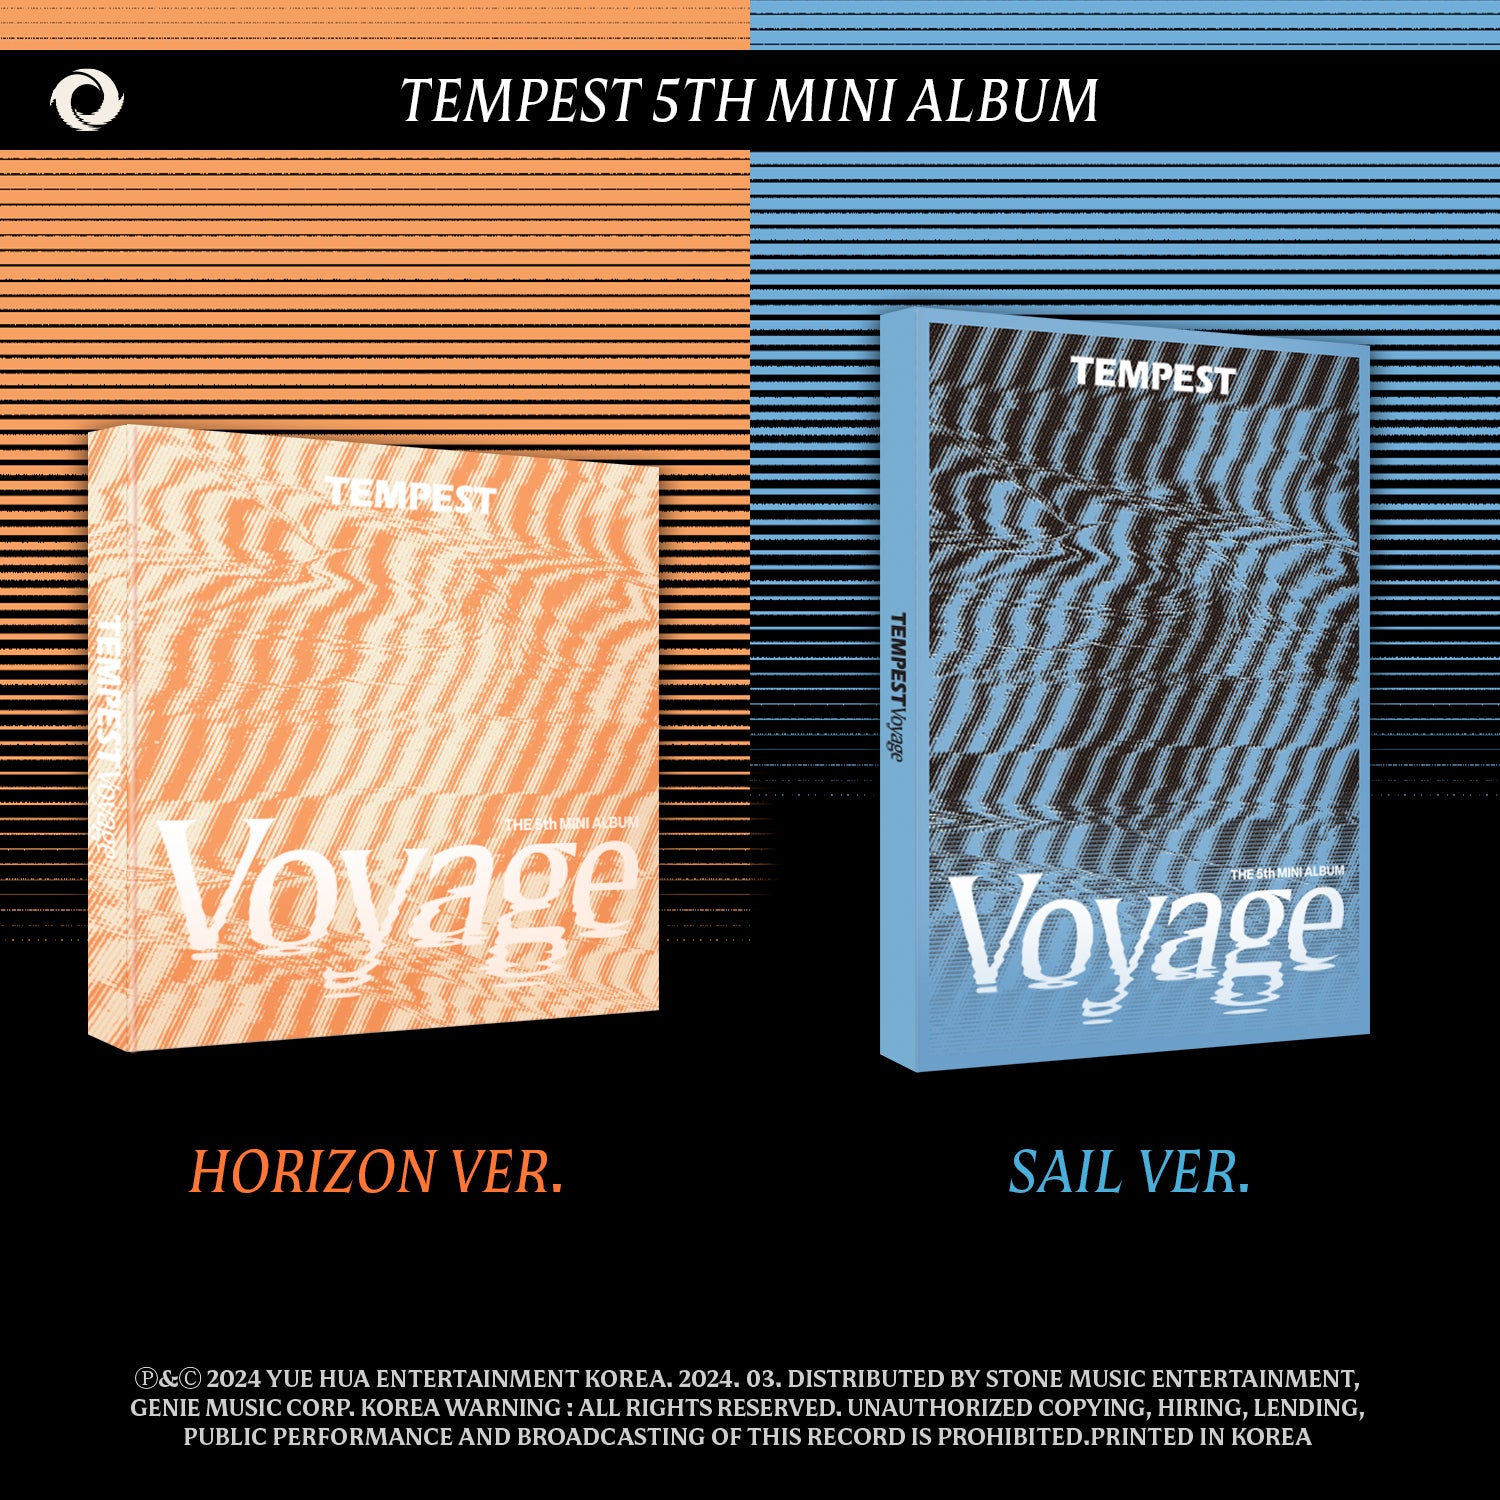 Viviz 3rd Mini Album - VarioUS (Photobook Ver.) – Choice Music LA